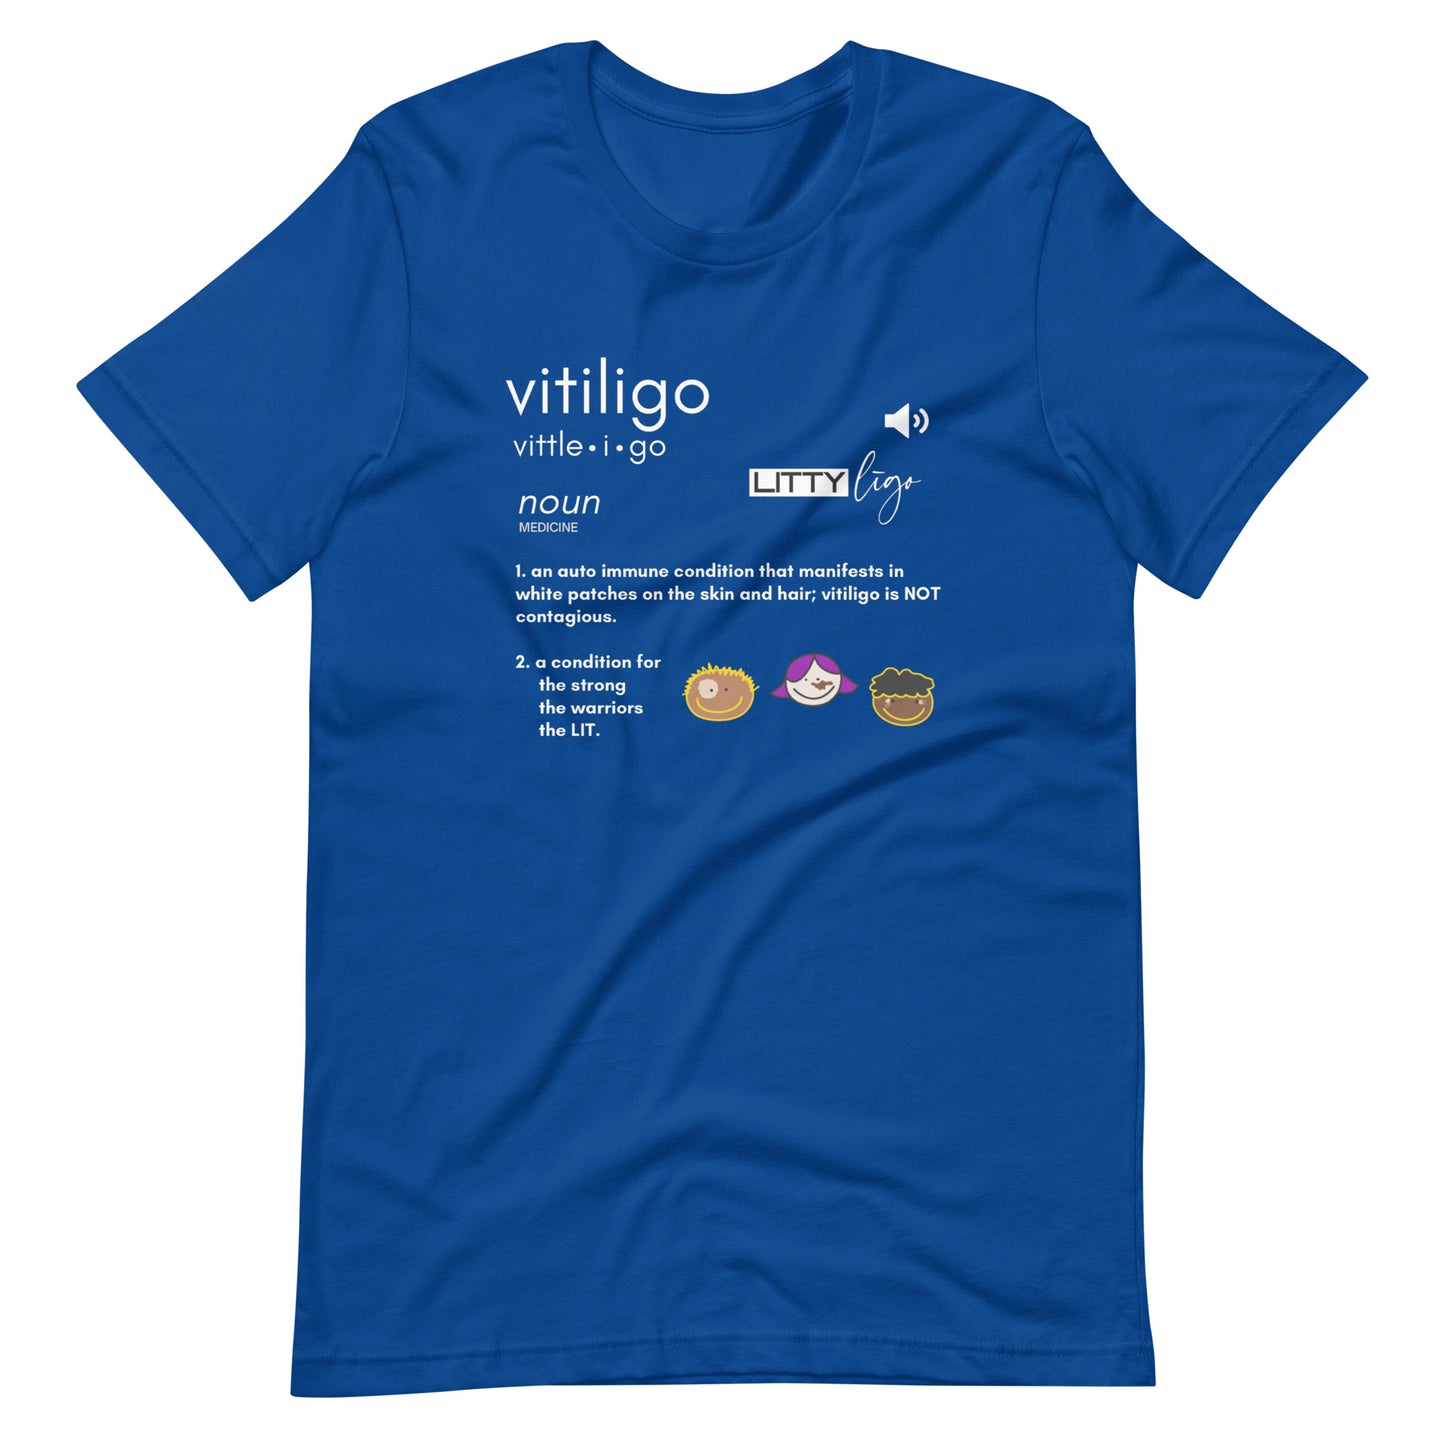 Vitiligo Definition Tee Colors